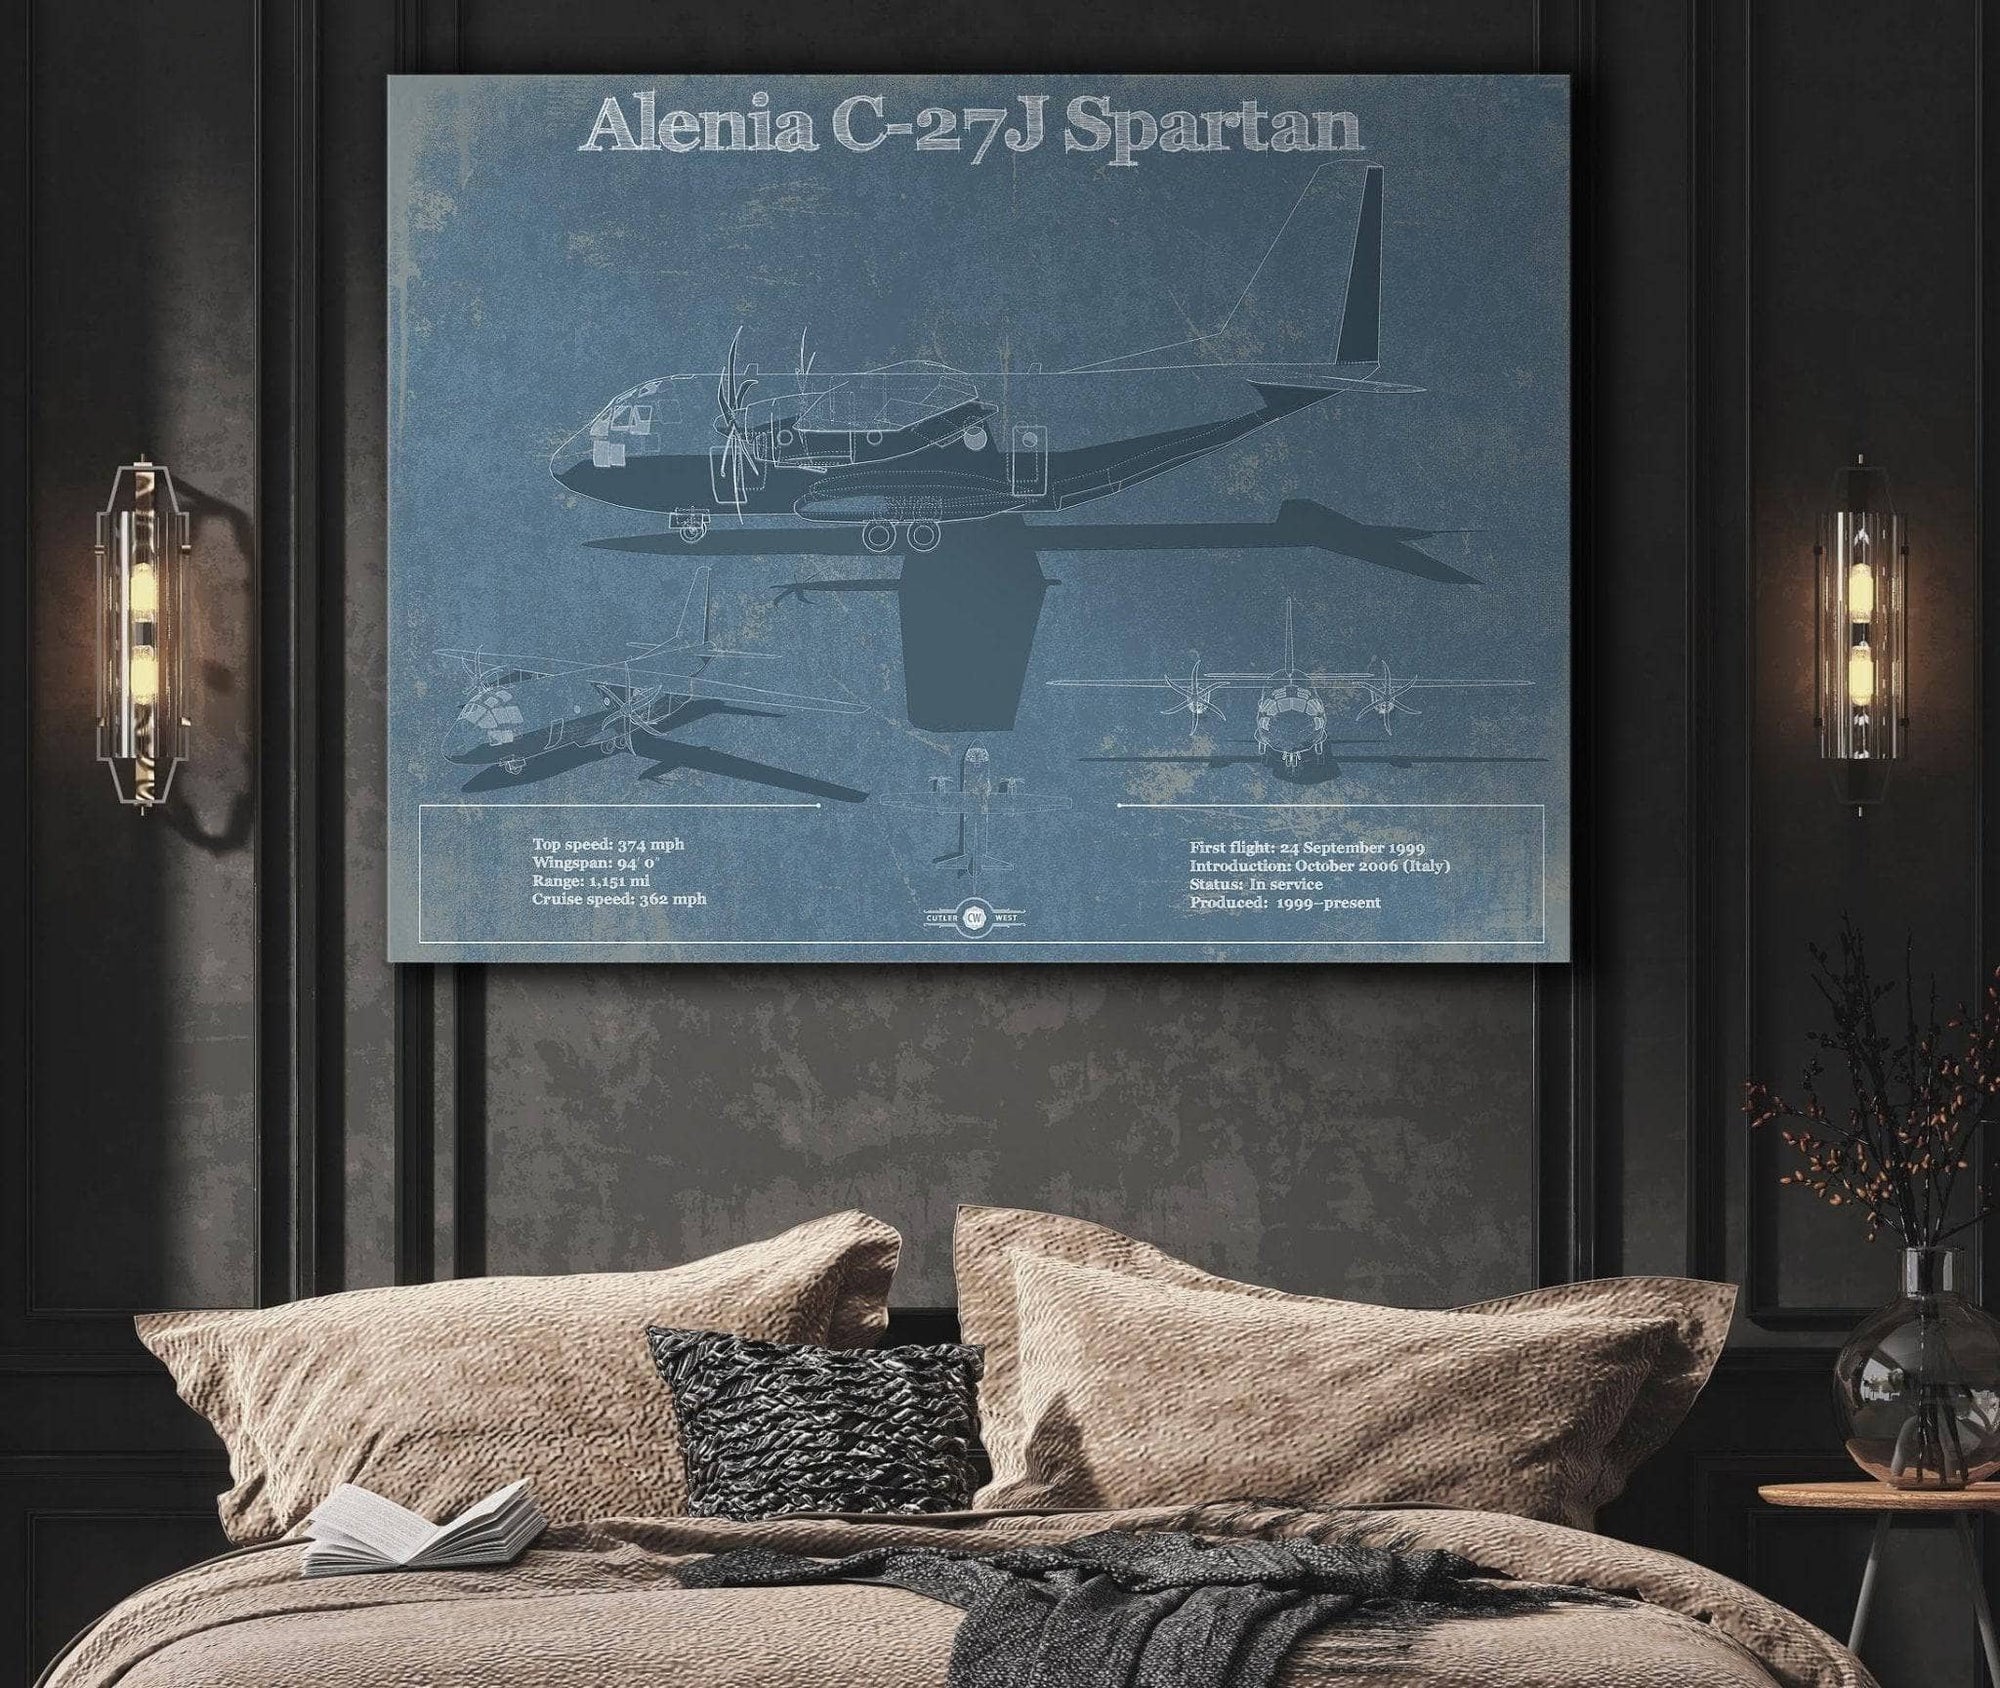 Cutler West Alenia C-27J Spartan Patent Blueprint Original Military Wall Art